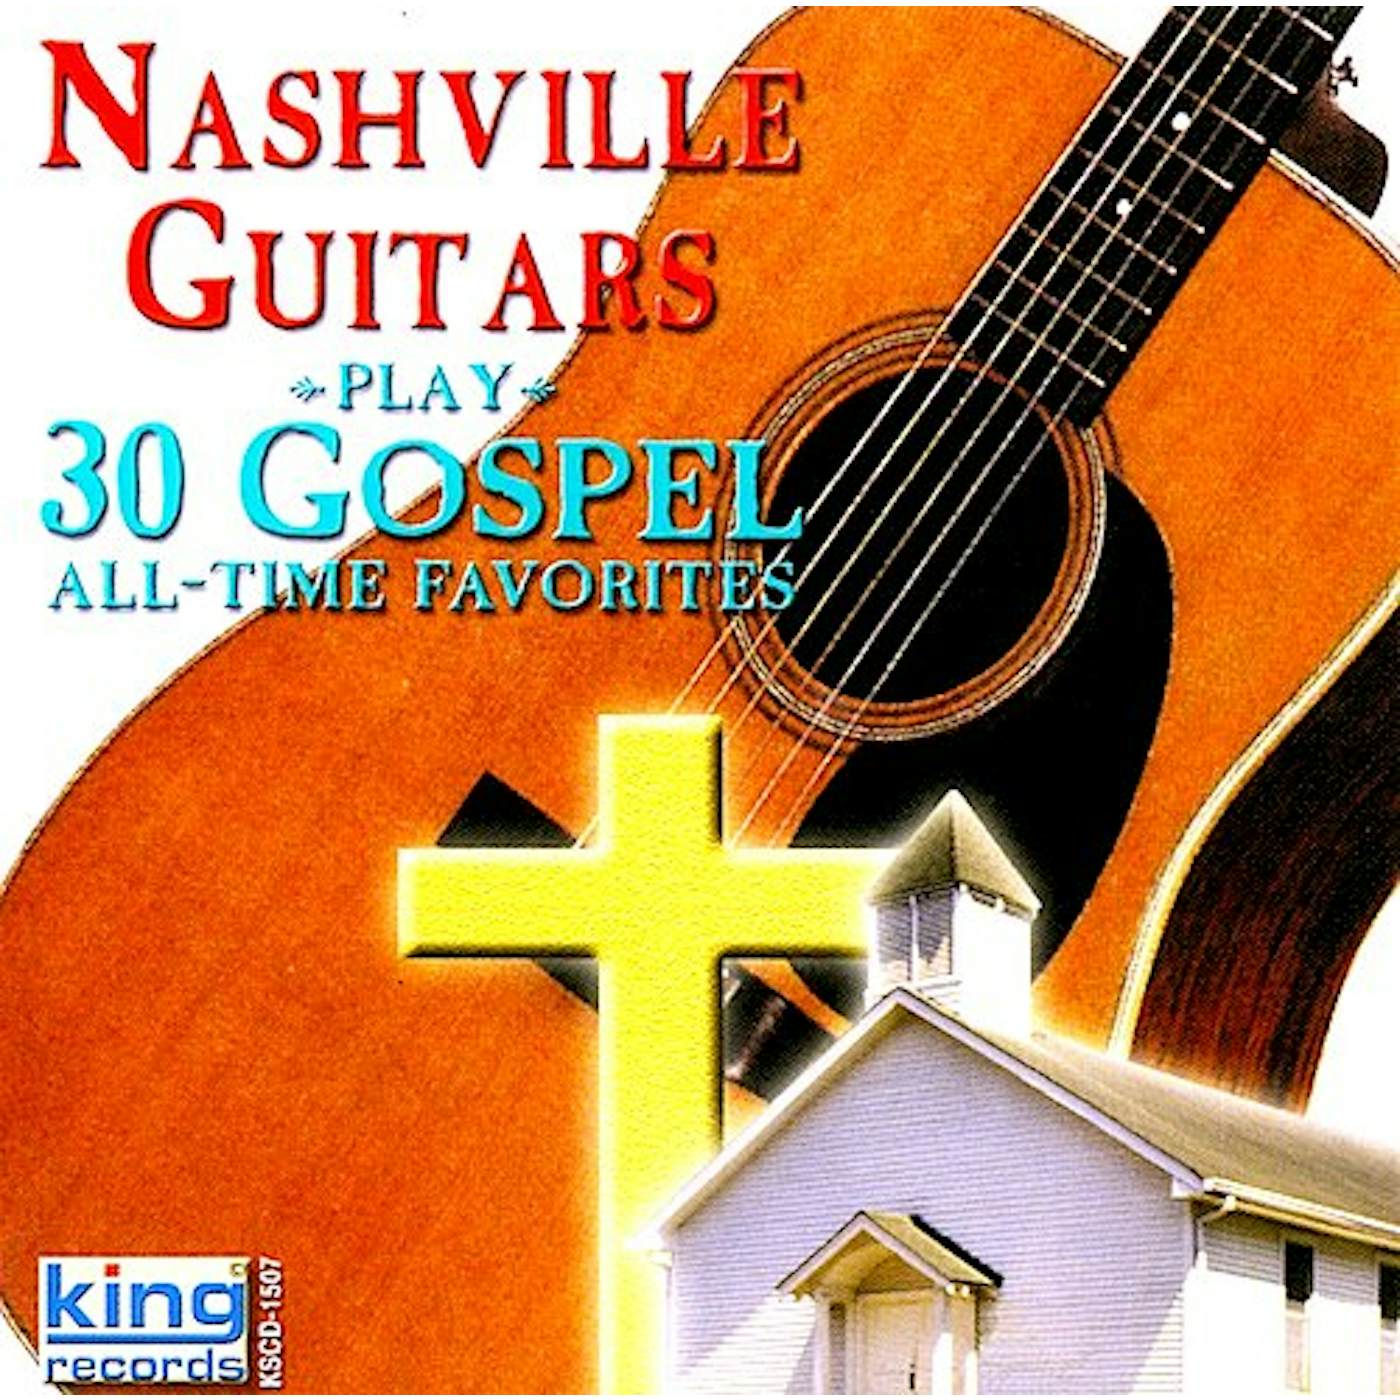 Nashville Guitars PLAY 30 GOSPEL ALL TIME FAVORITES CD